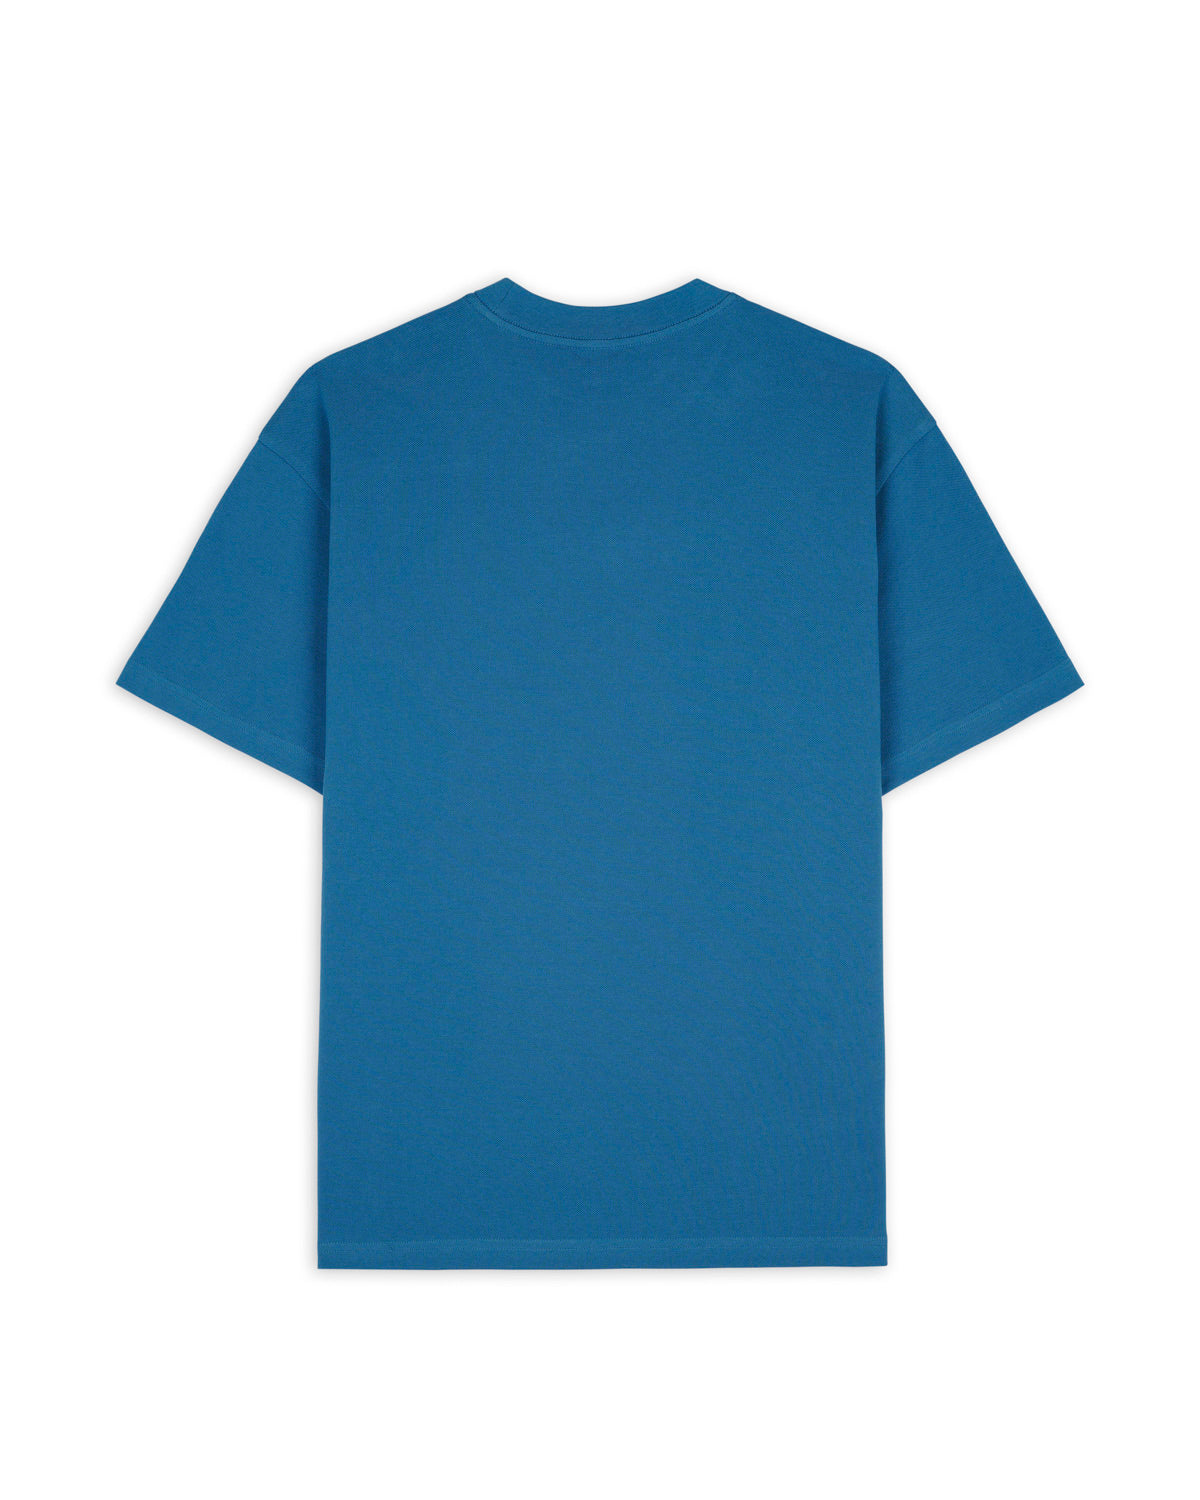 Tubes Pique T-Shirt - China Blue 2